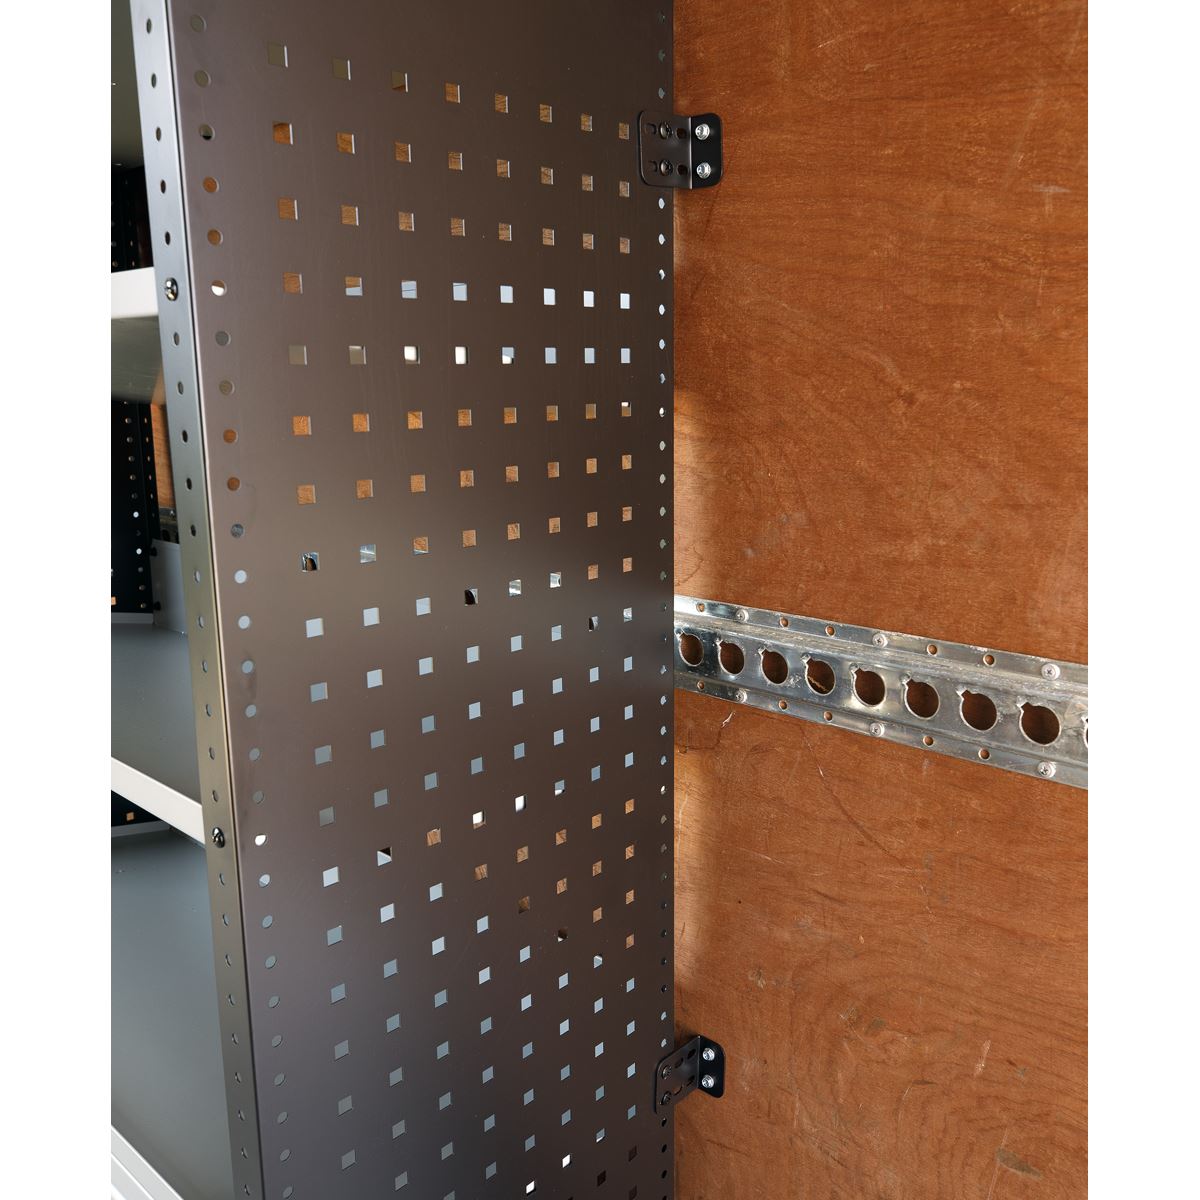 Sealey Modular Flat Shelf Van Storage Unit 925mm APMSV01